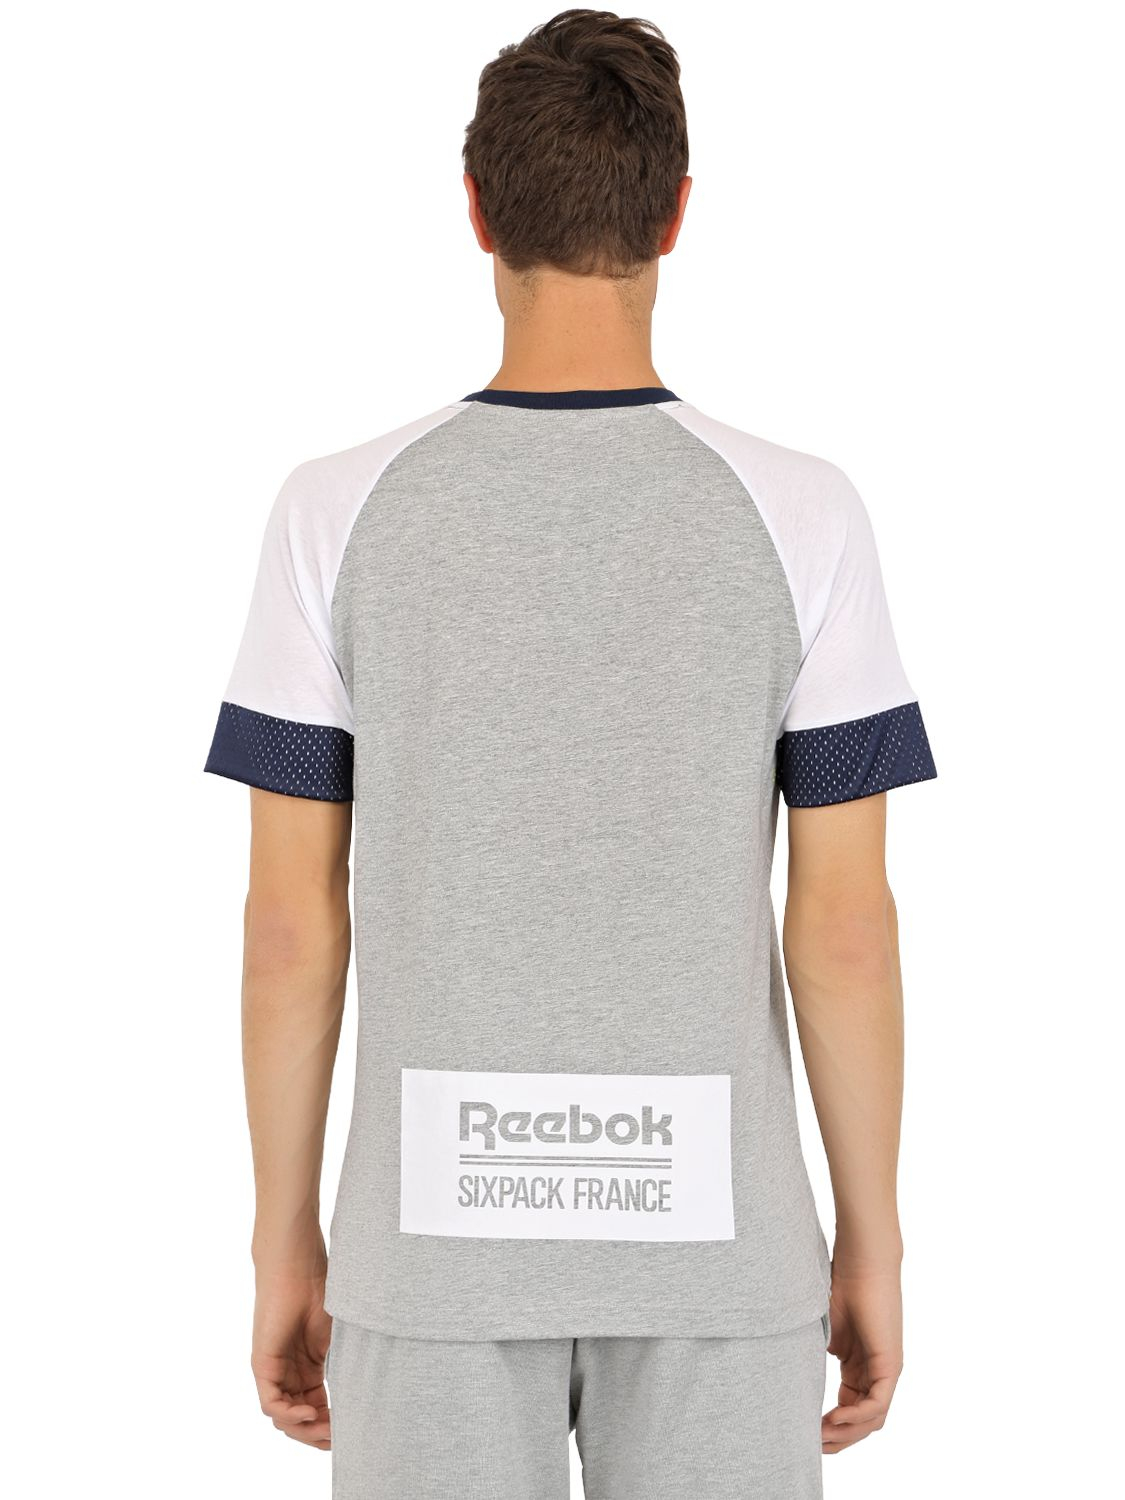 Reebok Sixpack France Cotton Blend T-shirt in Grey/White/Navy (Gray) for  Men - Lyst